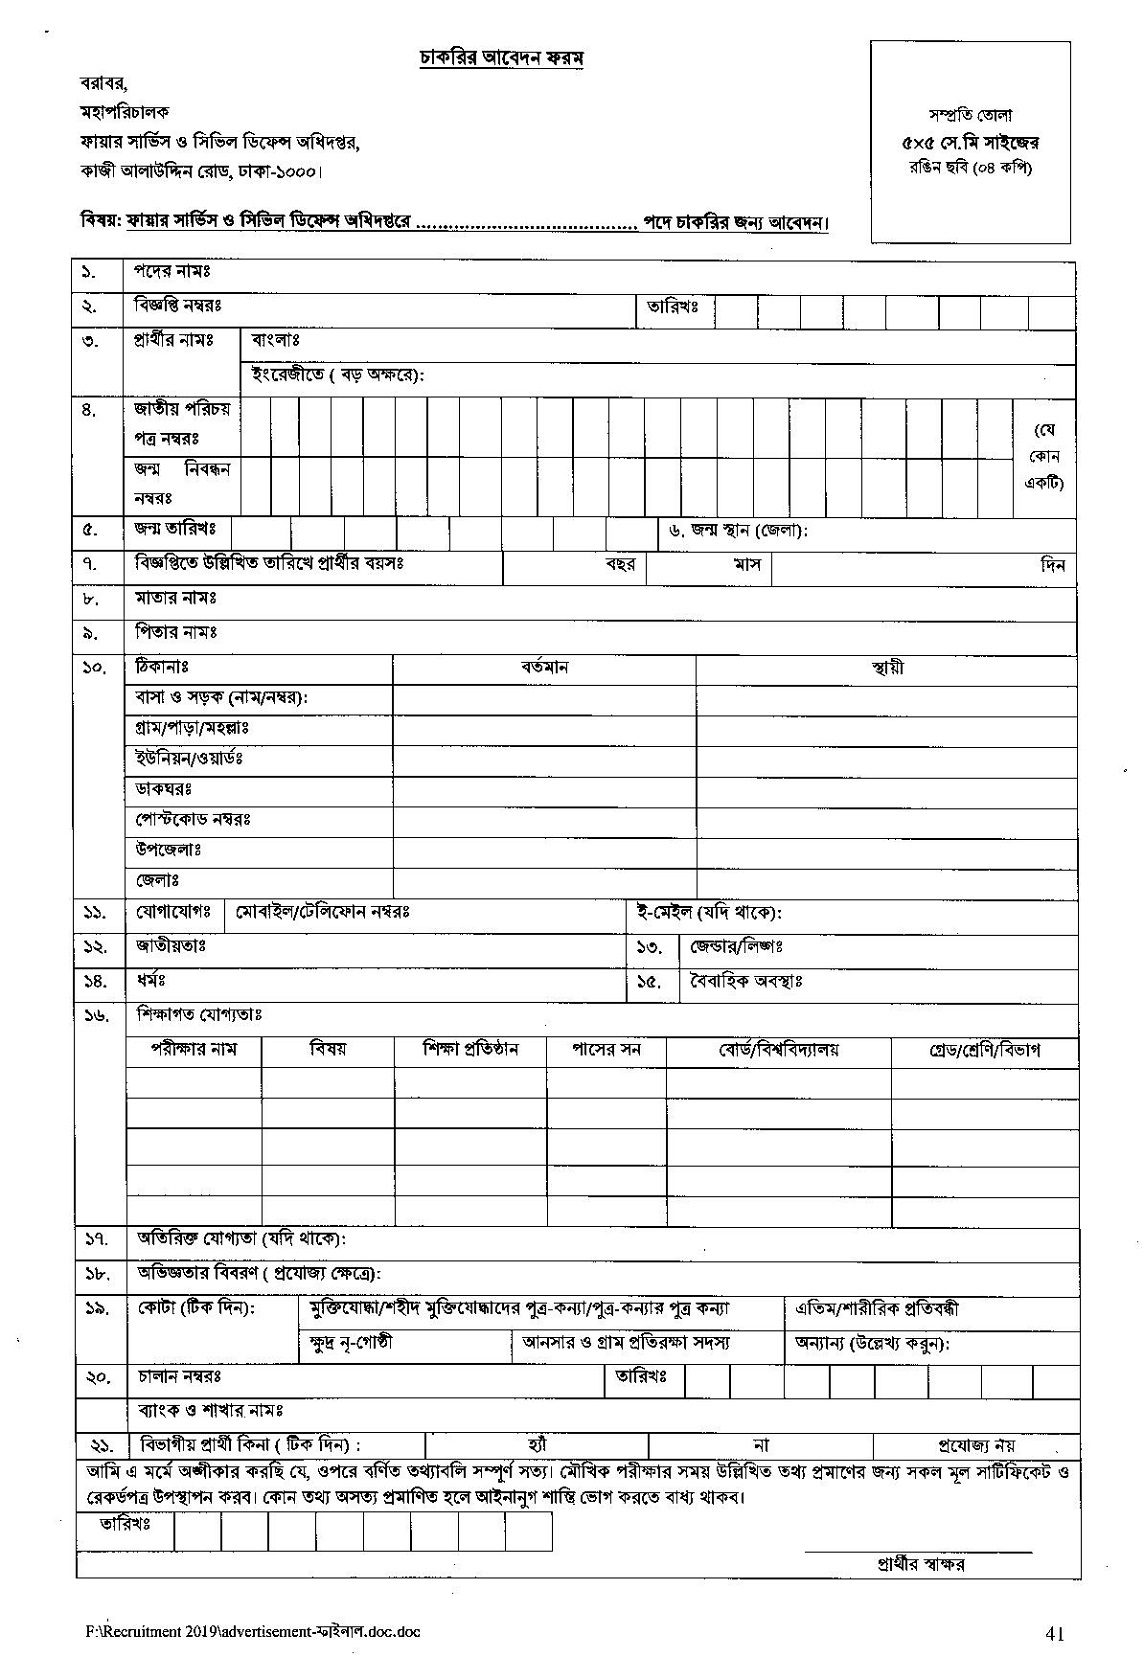 bgb job application form